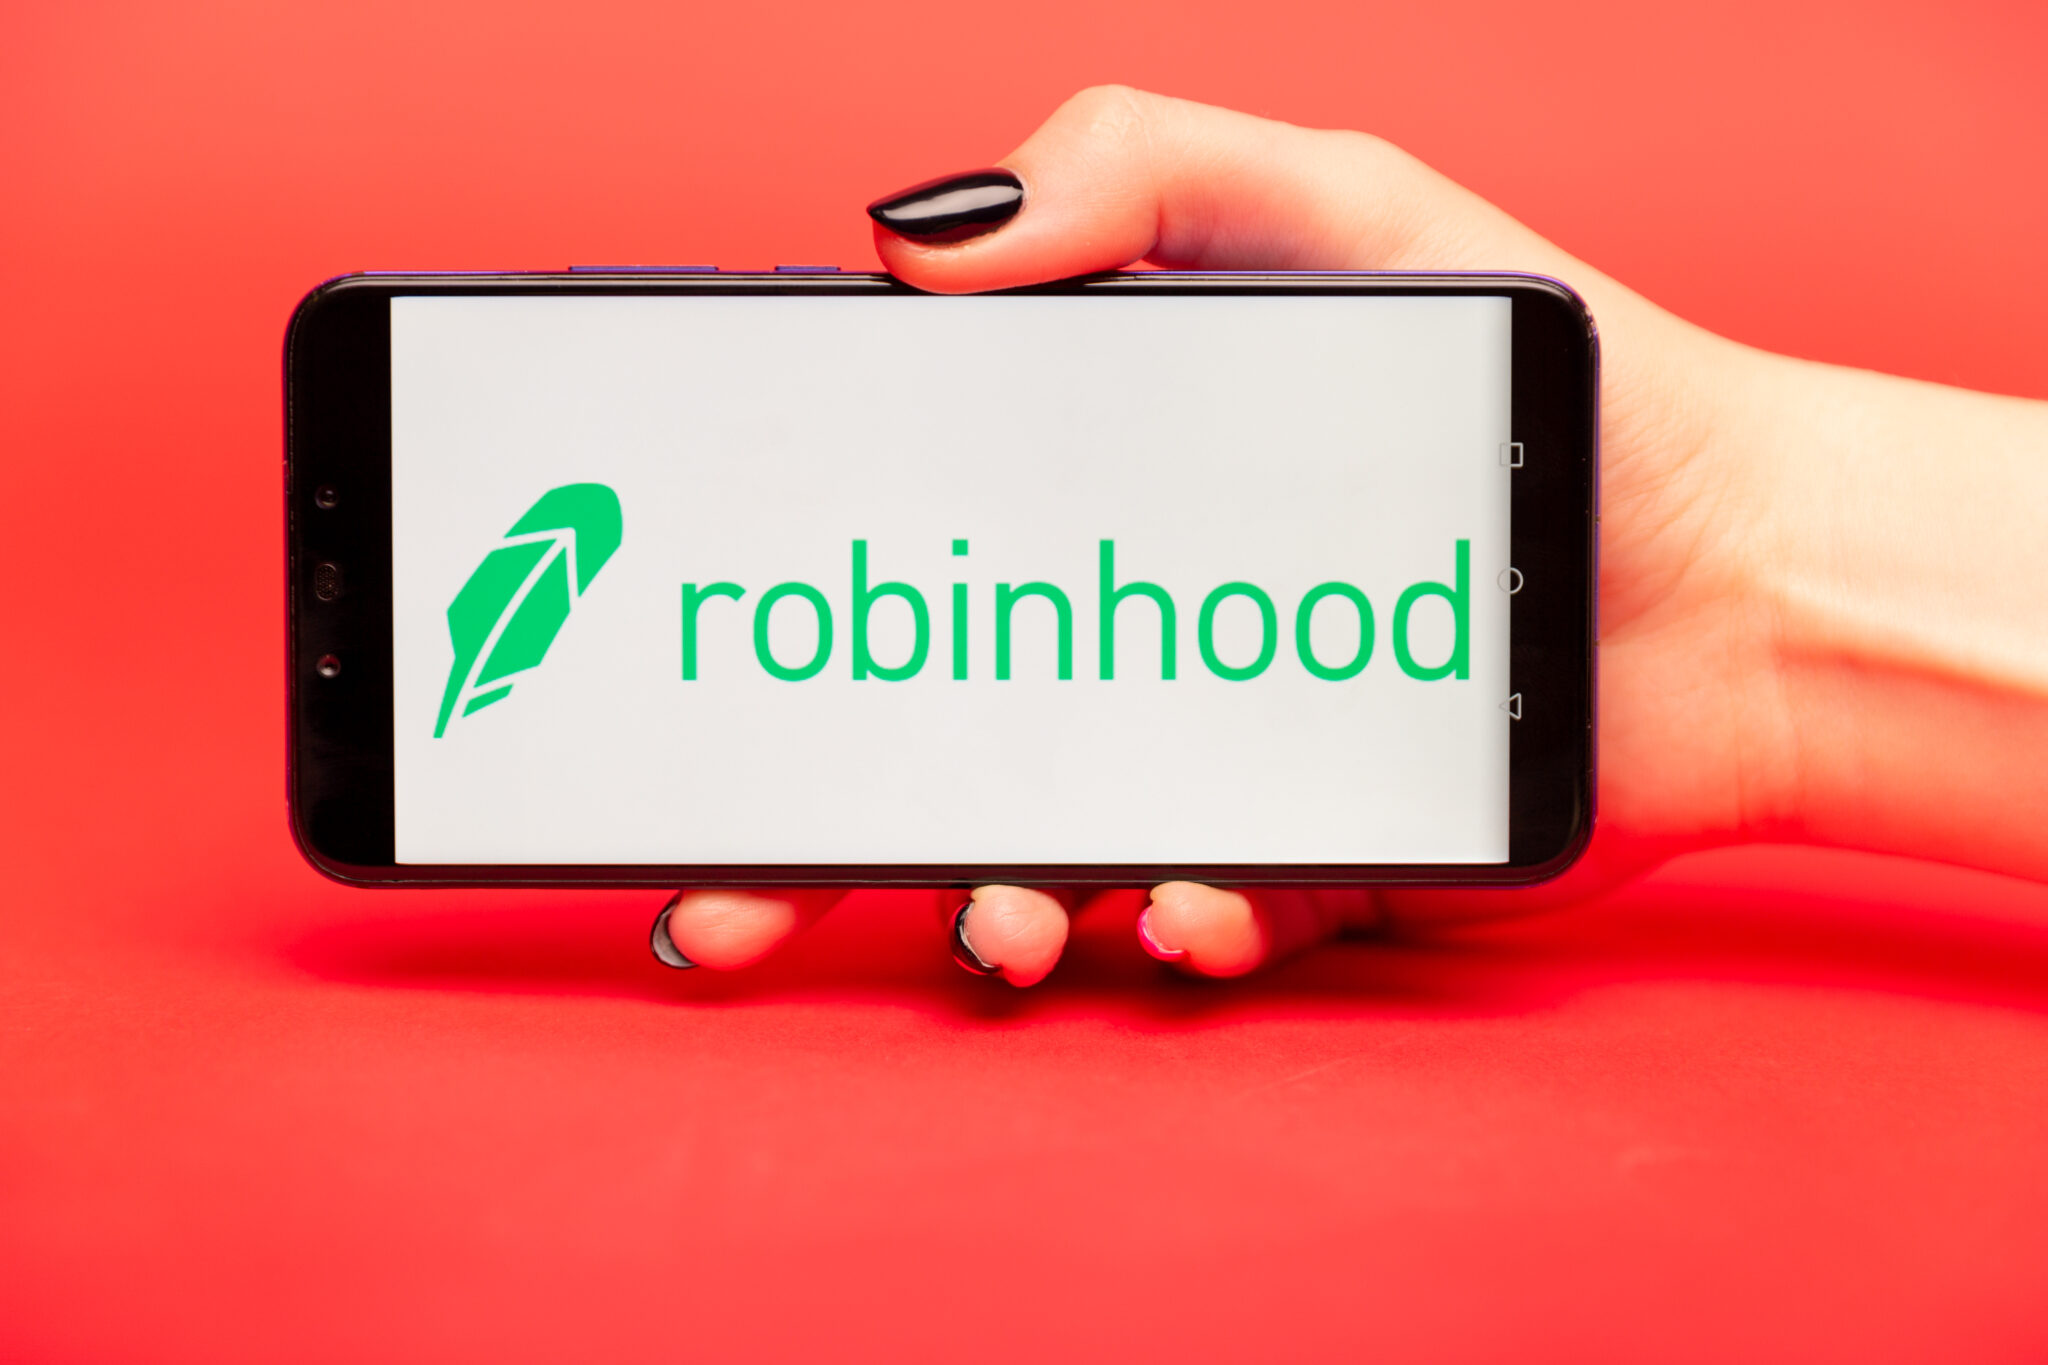 26 08 2019 Tula: robinhood on the phone display. Logo